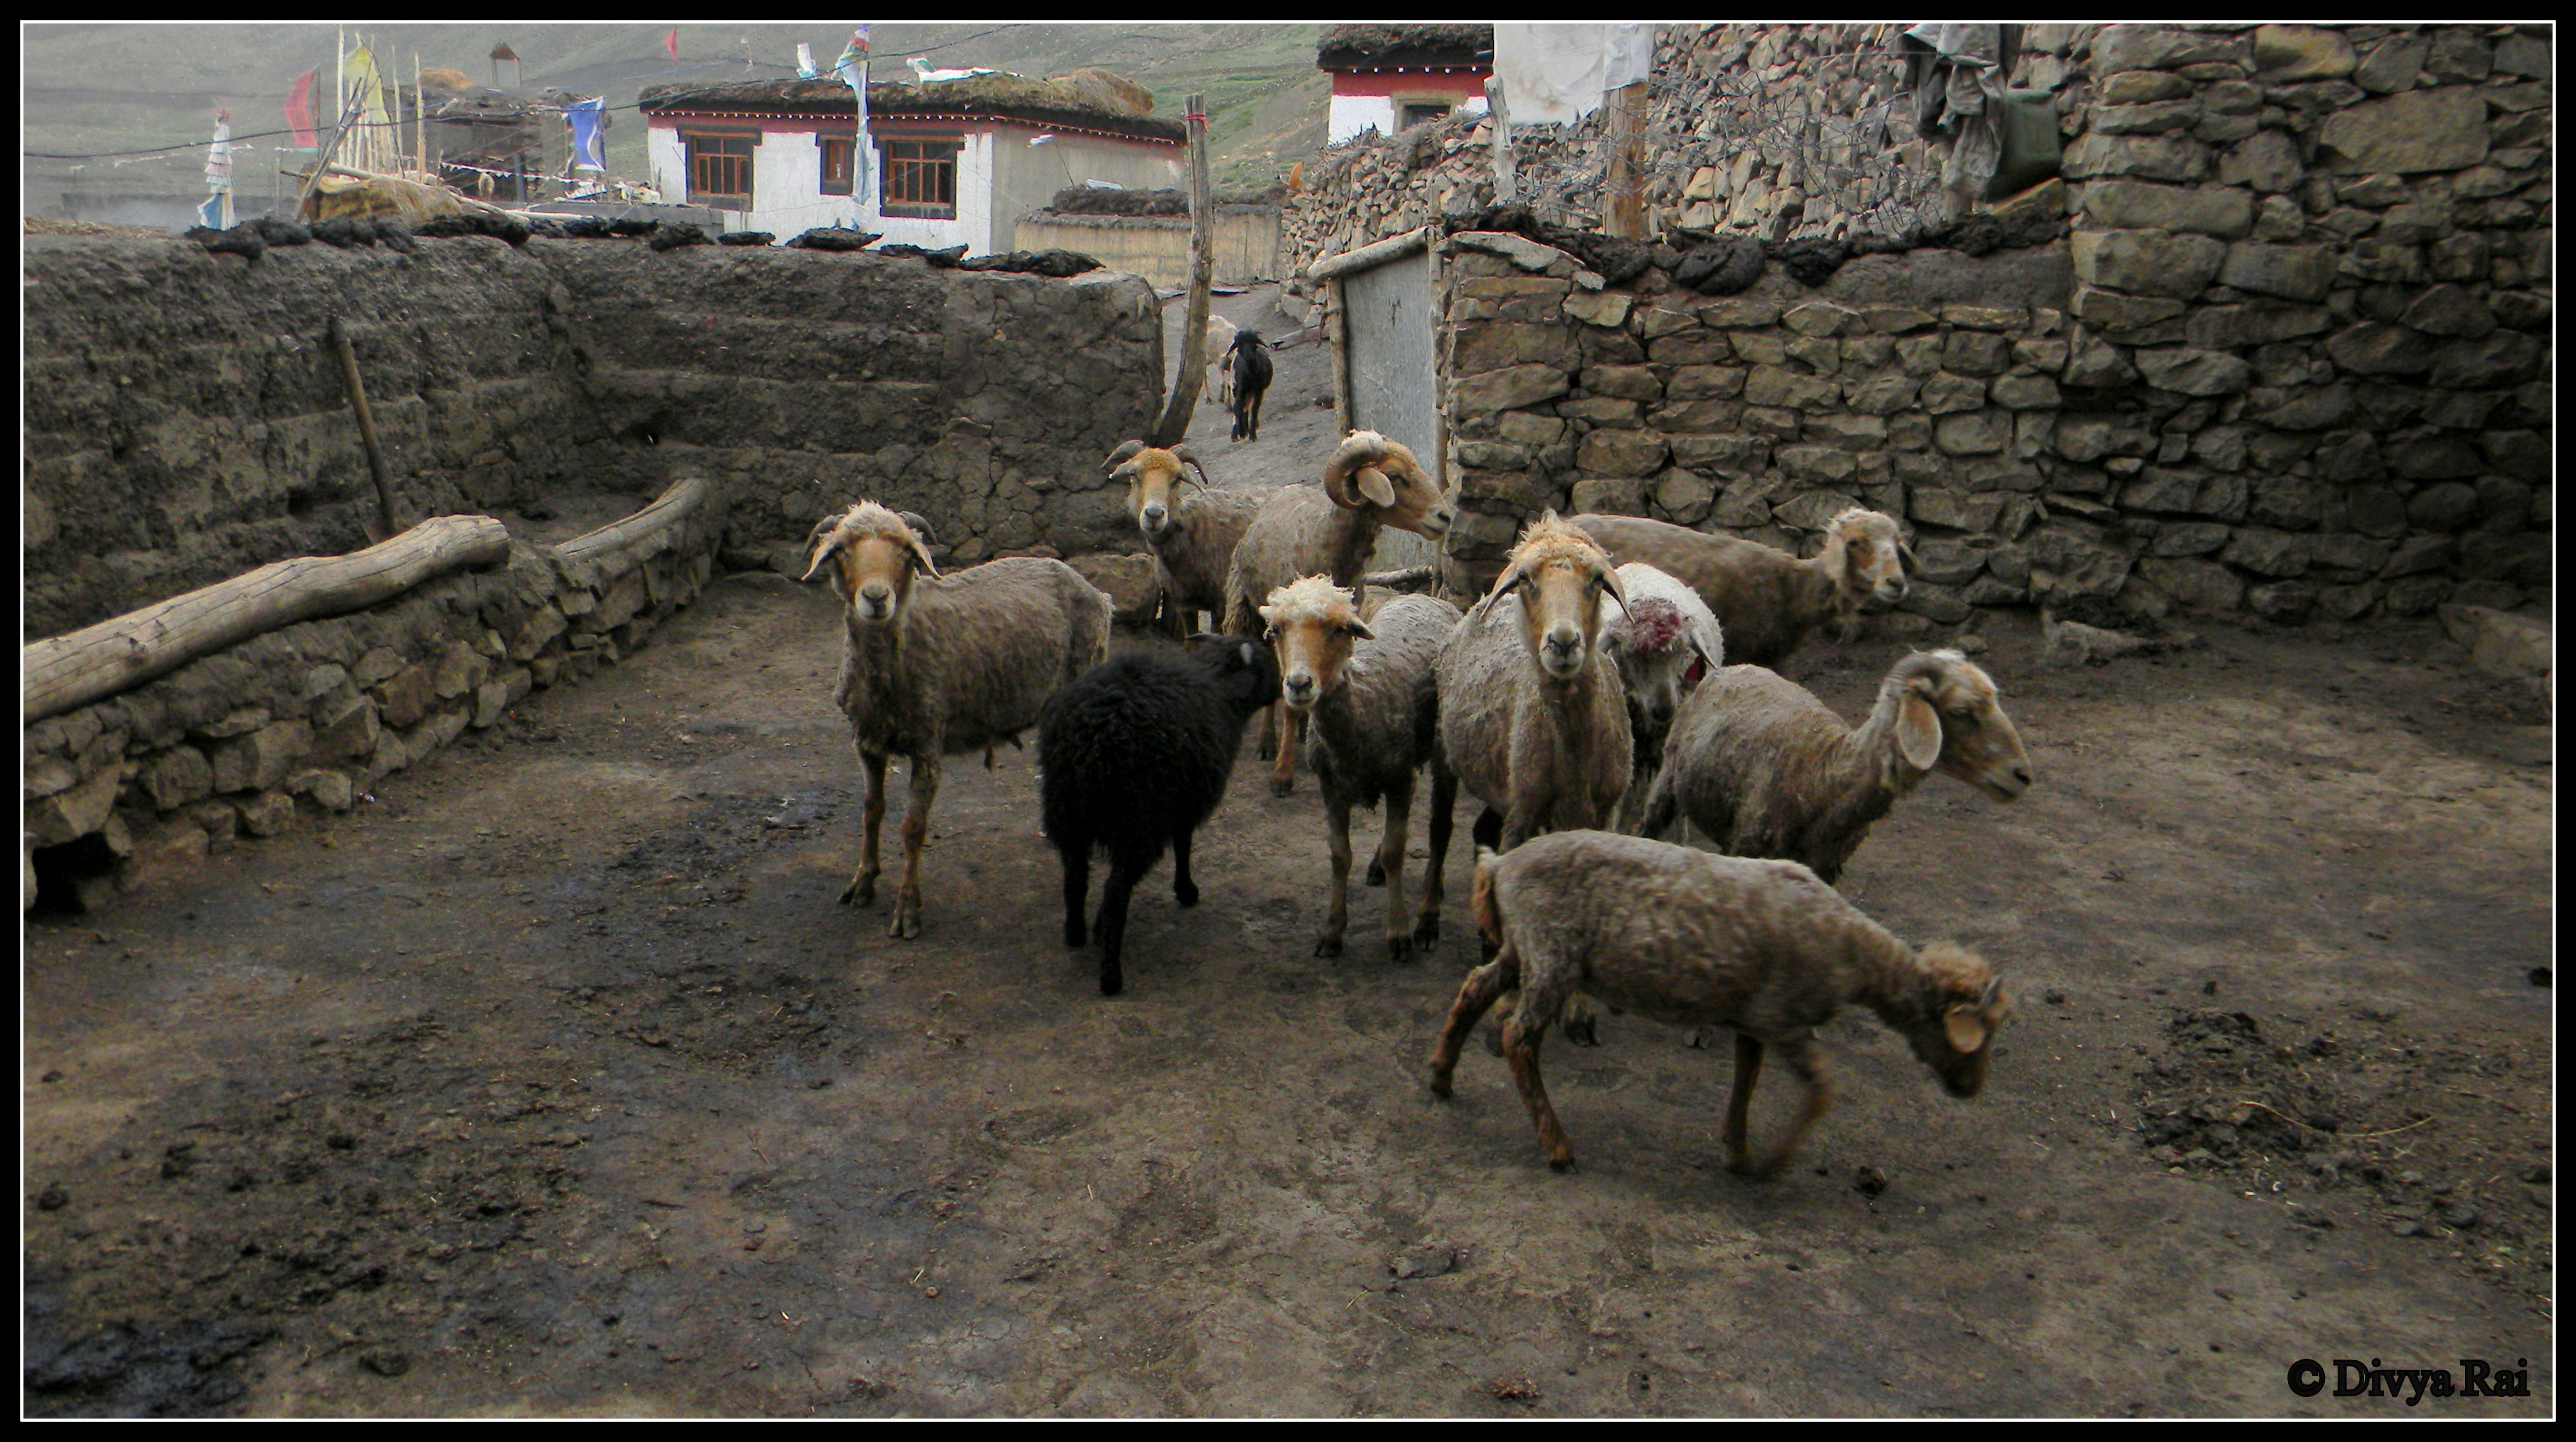 Himlayan village life